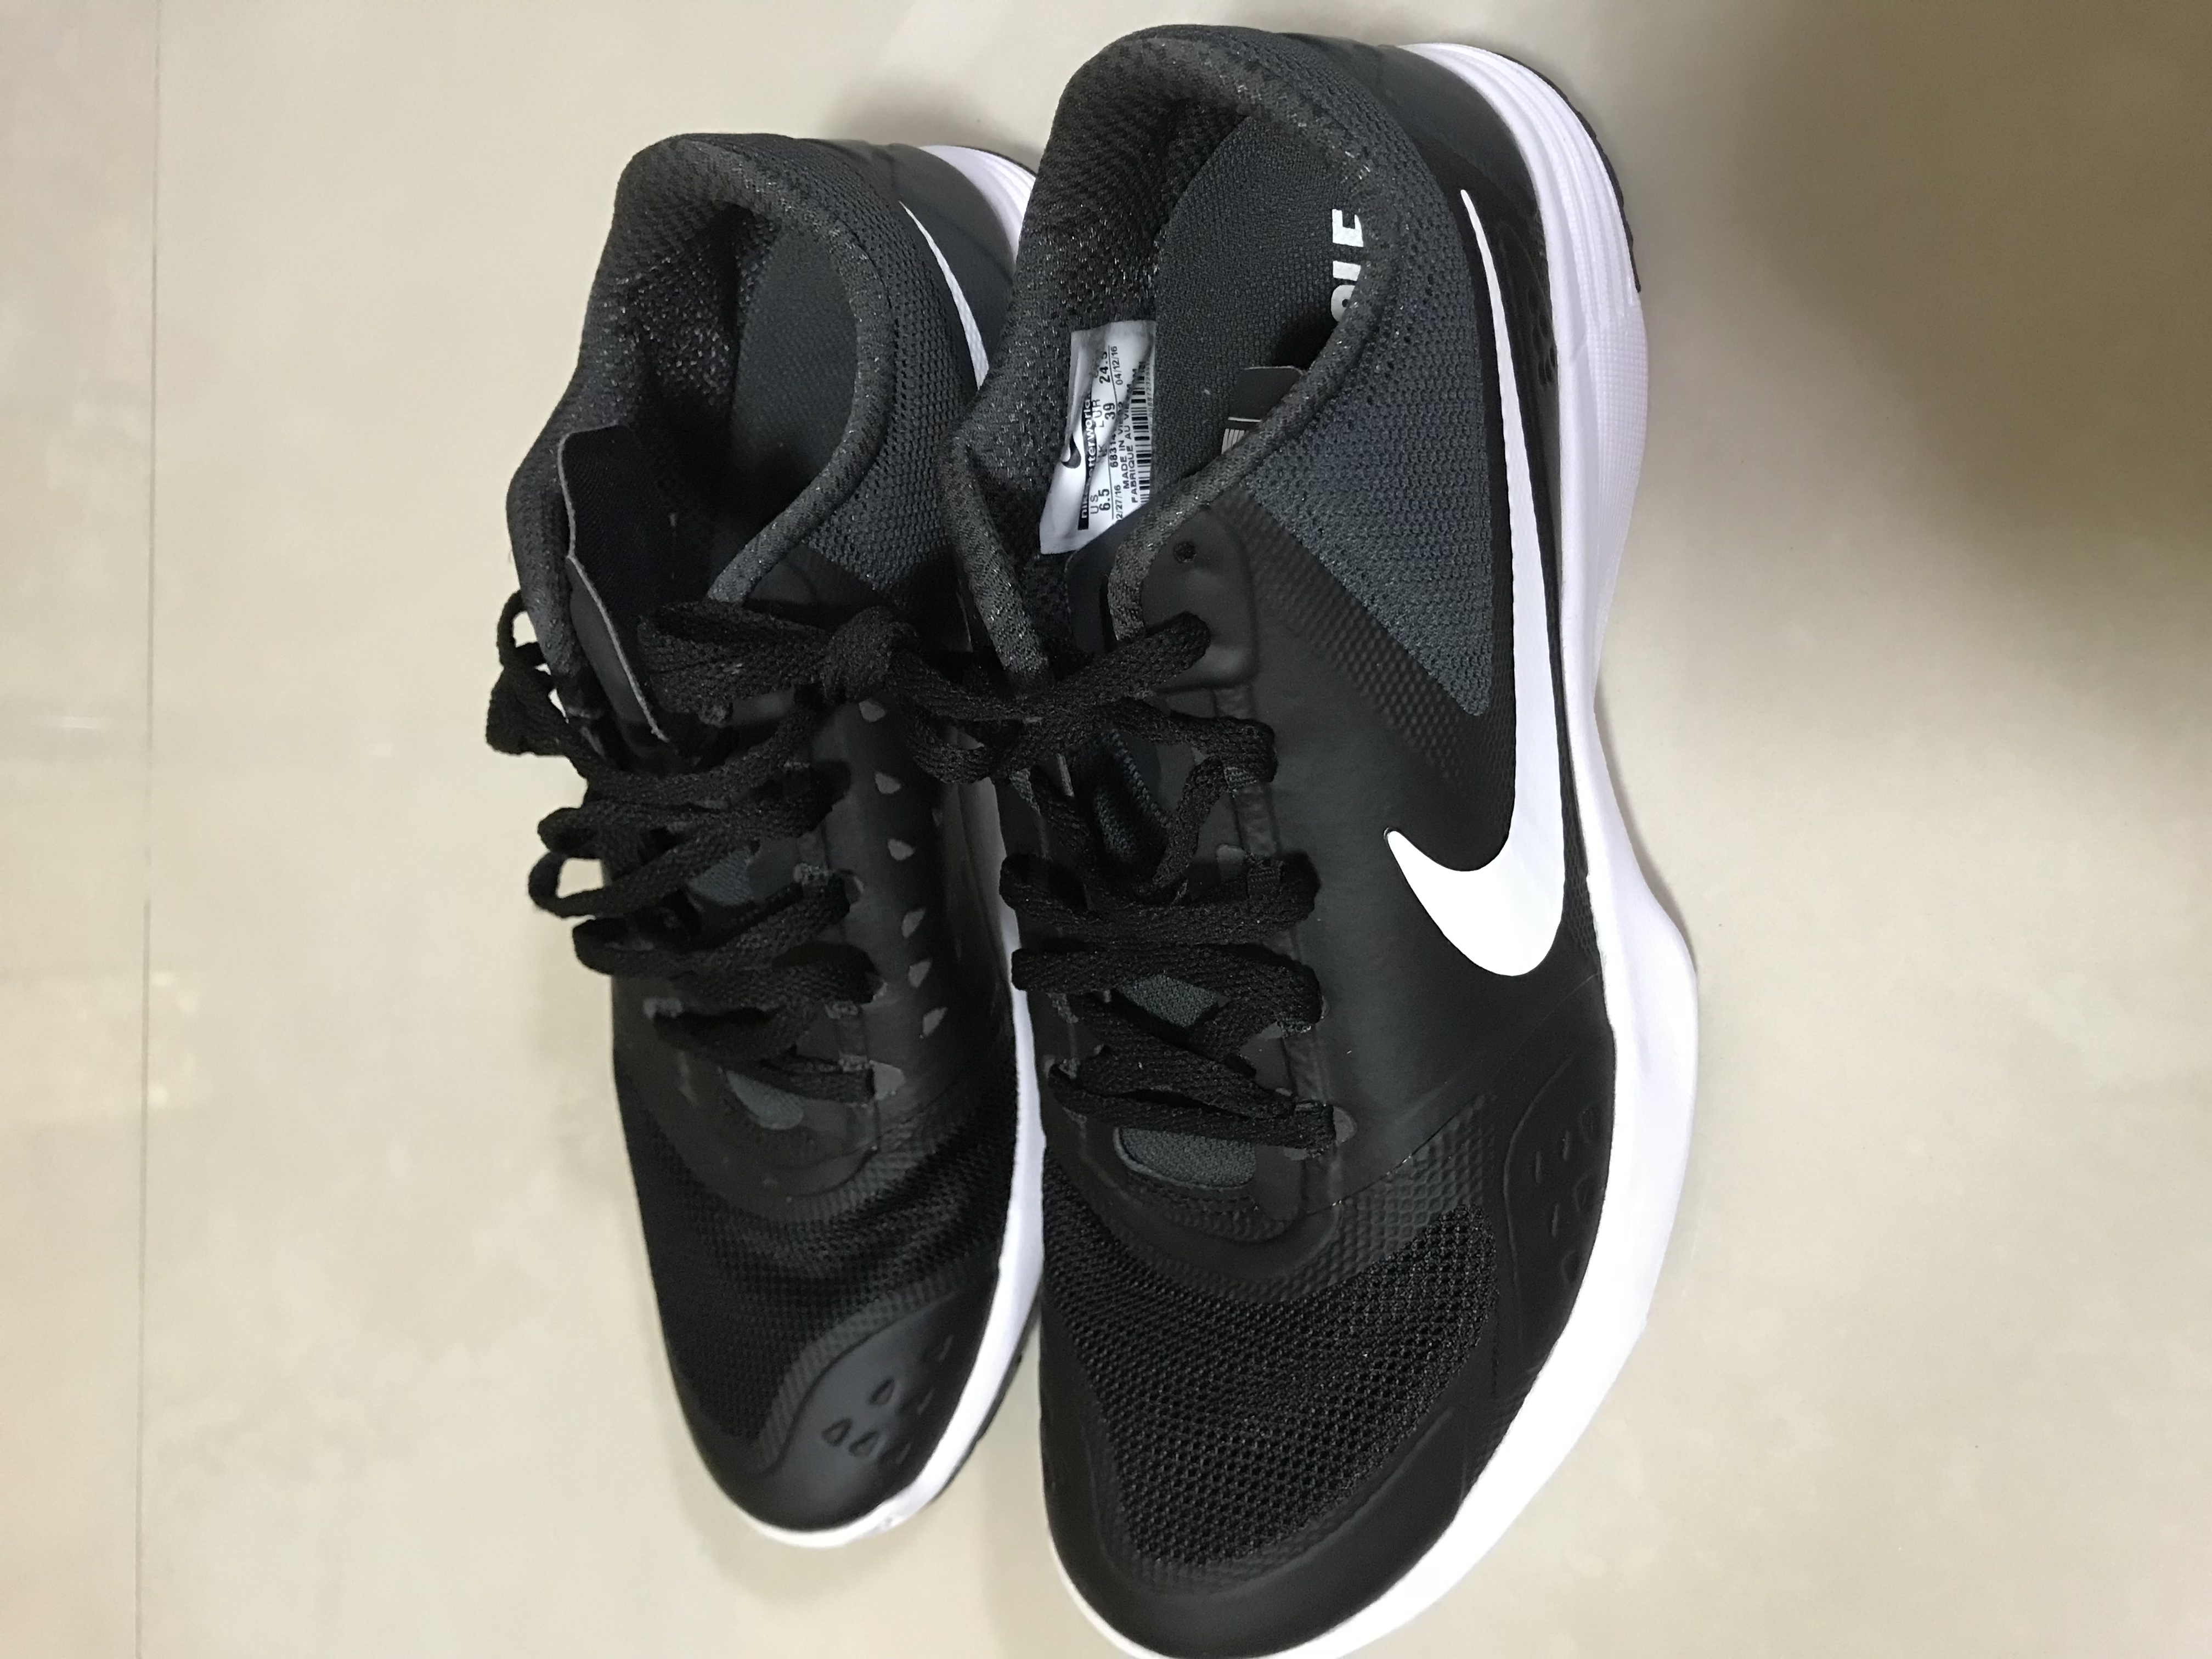 BN Nike Kid Shoes Size US6.5 | SingaporeMotherhood Forum